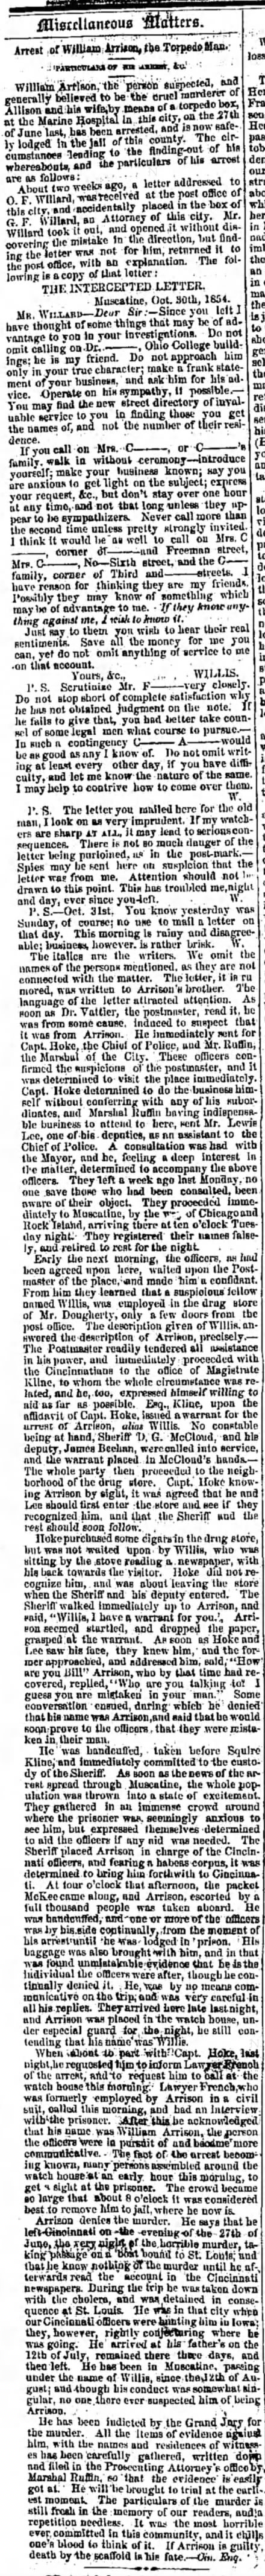 Arrest of Wm Arrison, the Torpedo Man, The Weekly Wisconsin, 22 Nov 1854
